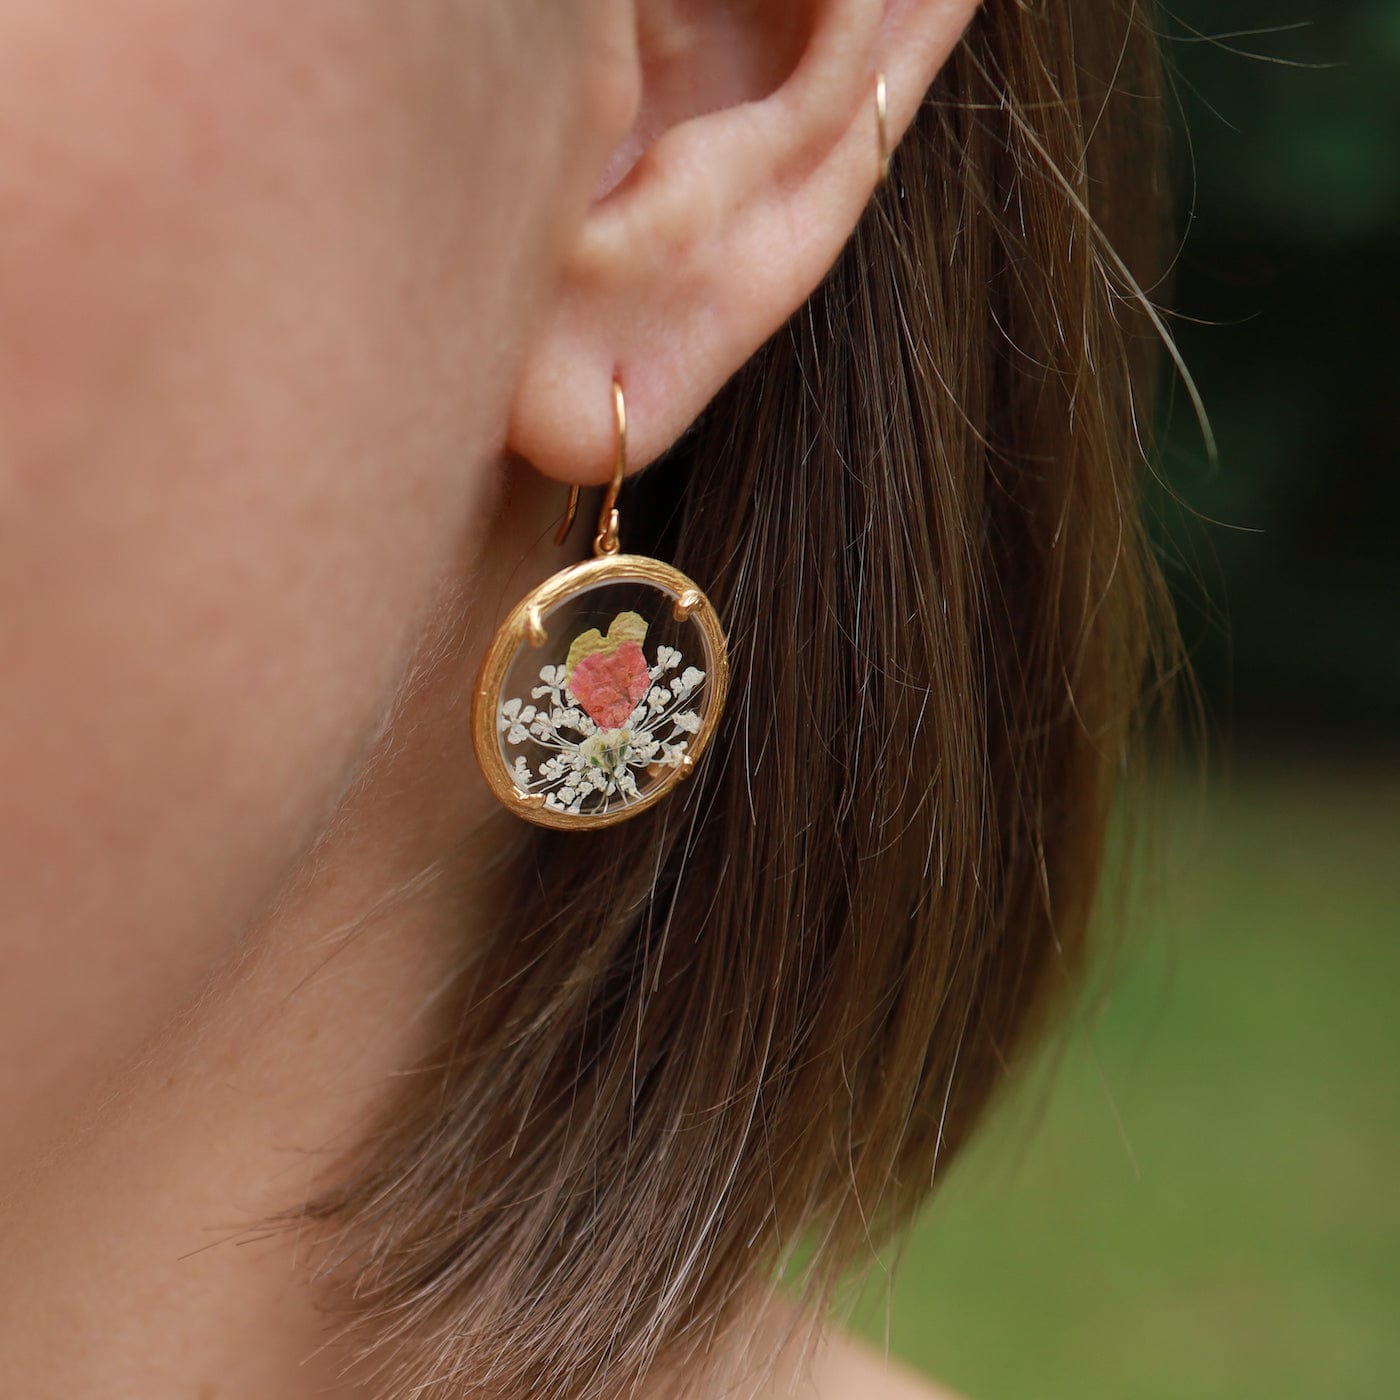 EAR-VRM Orange Hearts Small Glass Botanical Earrings - 18K Gold Vermeil